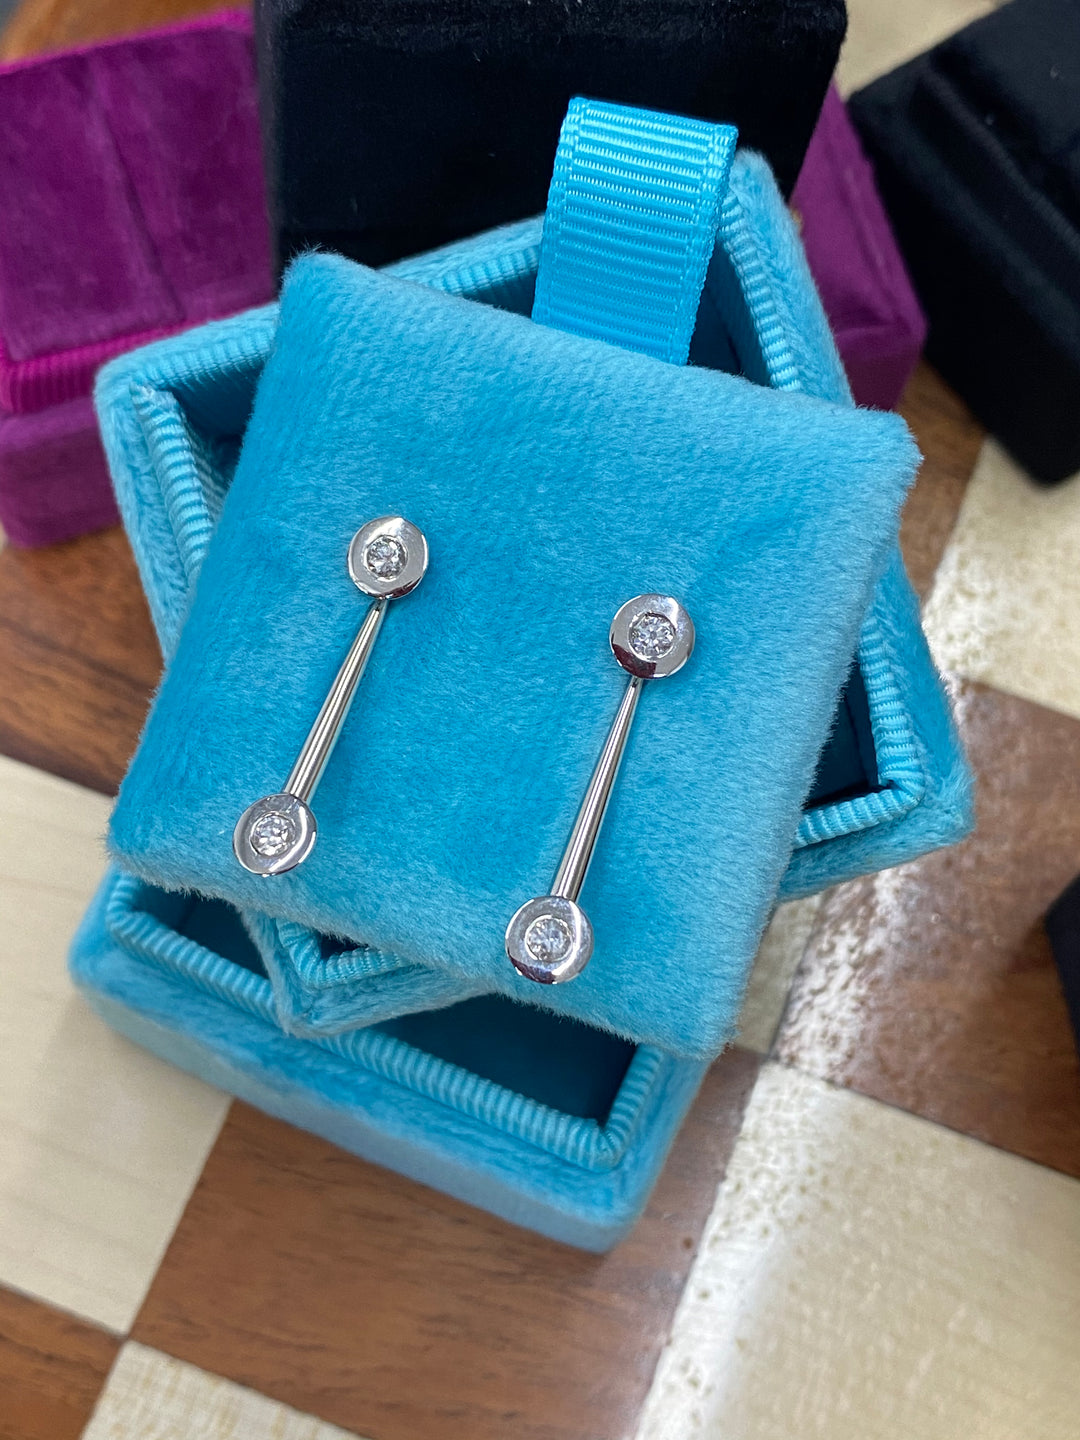 Platinum Bezel Set Diamond Stud Earring with Convertible Drop Convertible Drop Earrings in Platinum 